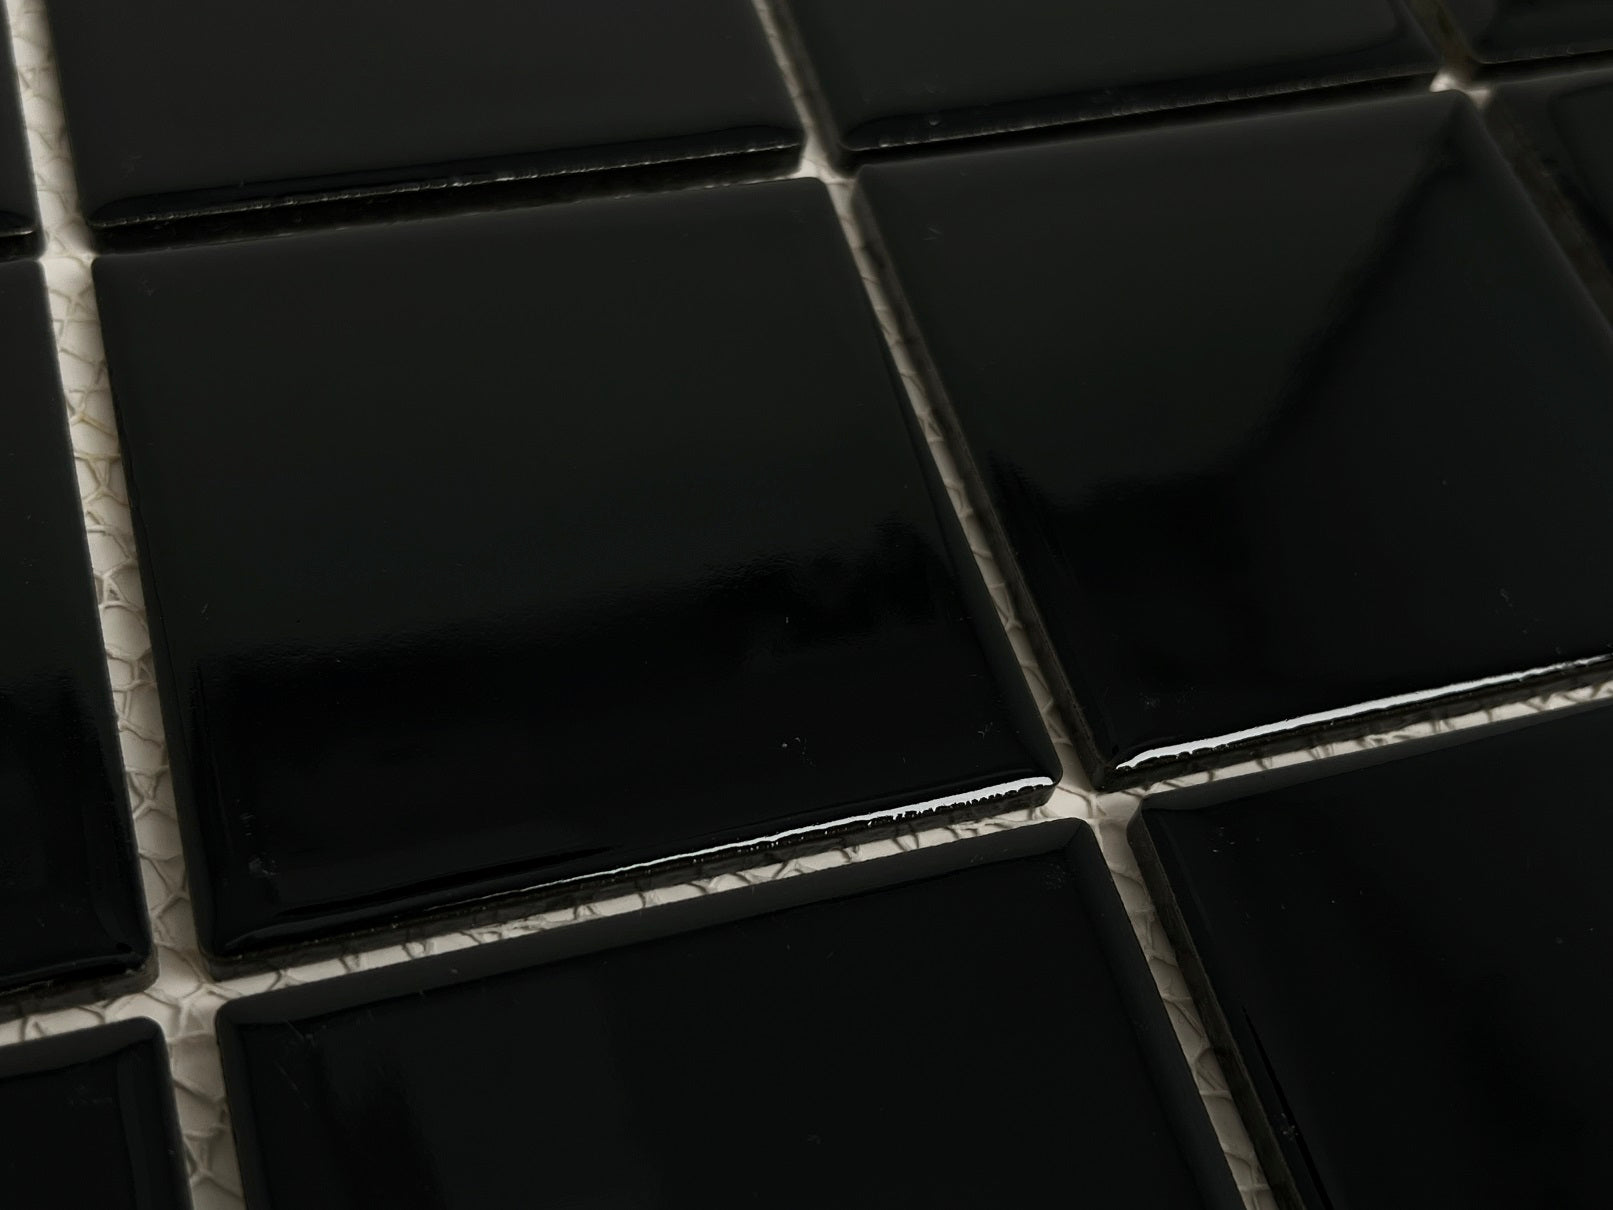 5 Square Feet 3x3 Black Shiny Tile for Wall Spa Swimming Pool Shower Kitchen Countertop Bathroom Sink Backsplash - 5 SF 3" x 3" Porcelain Tile